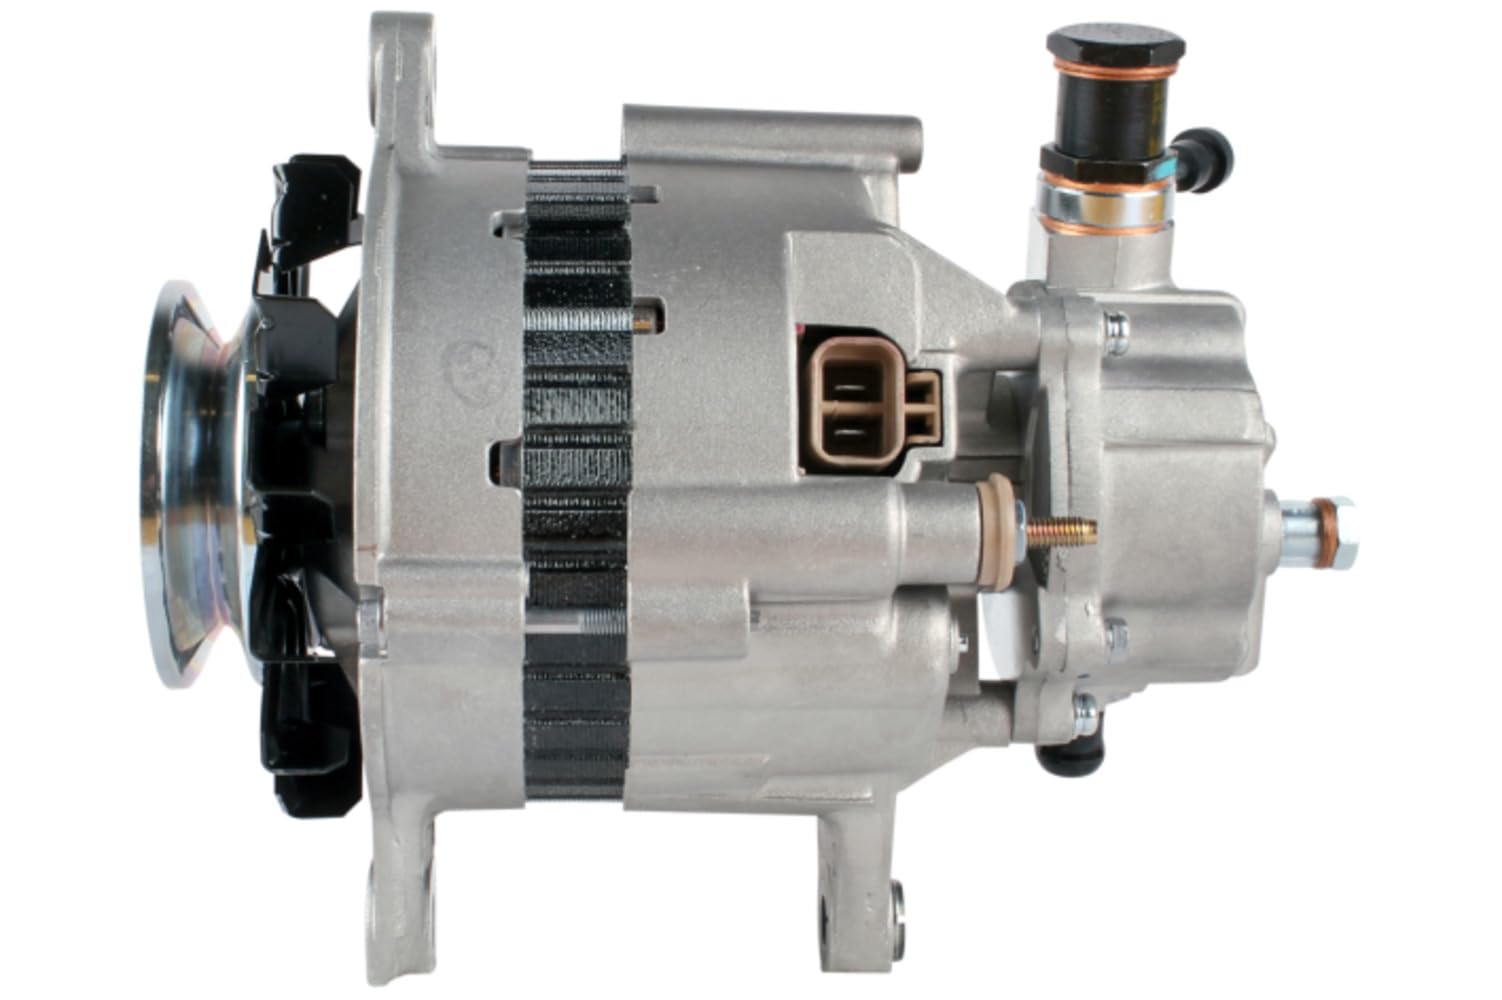 HELLA - Generator/Lichtmaschine - 14V - 60A - für u.a. Nissan Terrano II (R20) - 8EL 012 426-231 von Hella